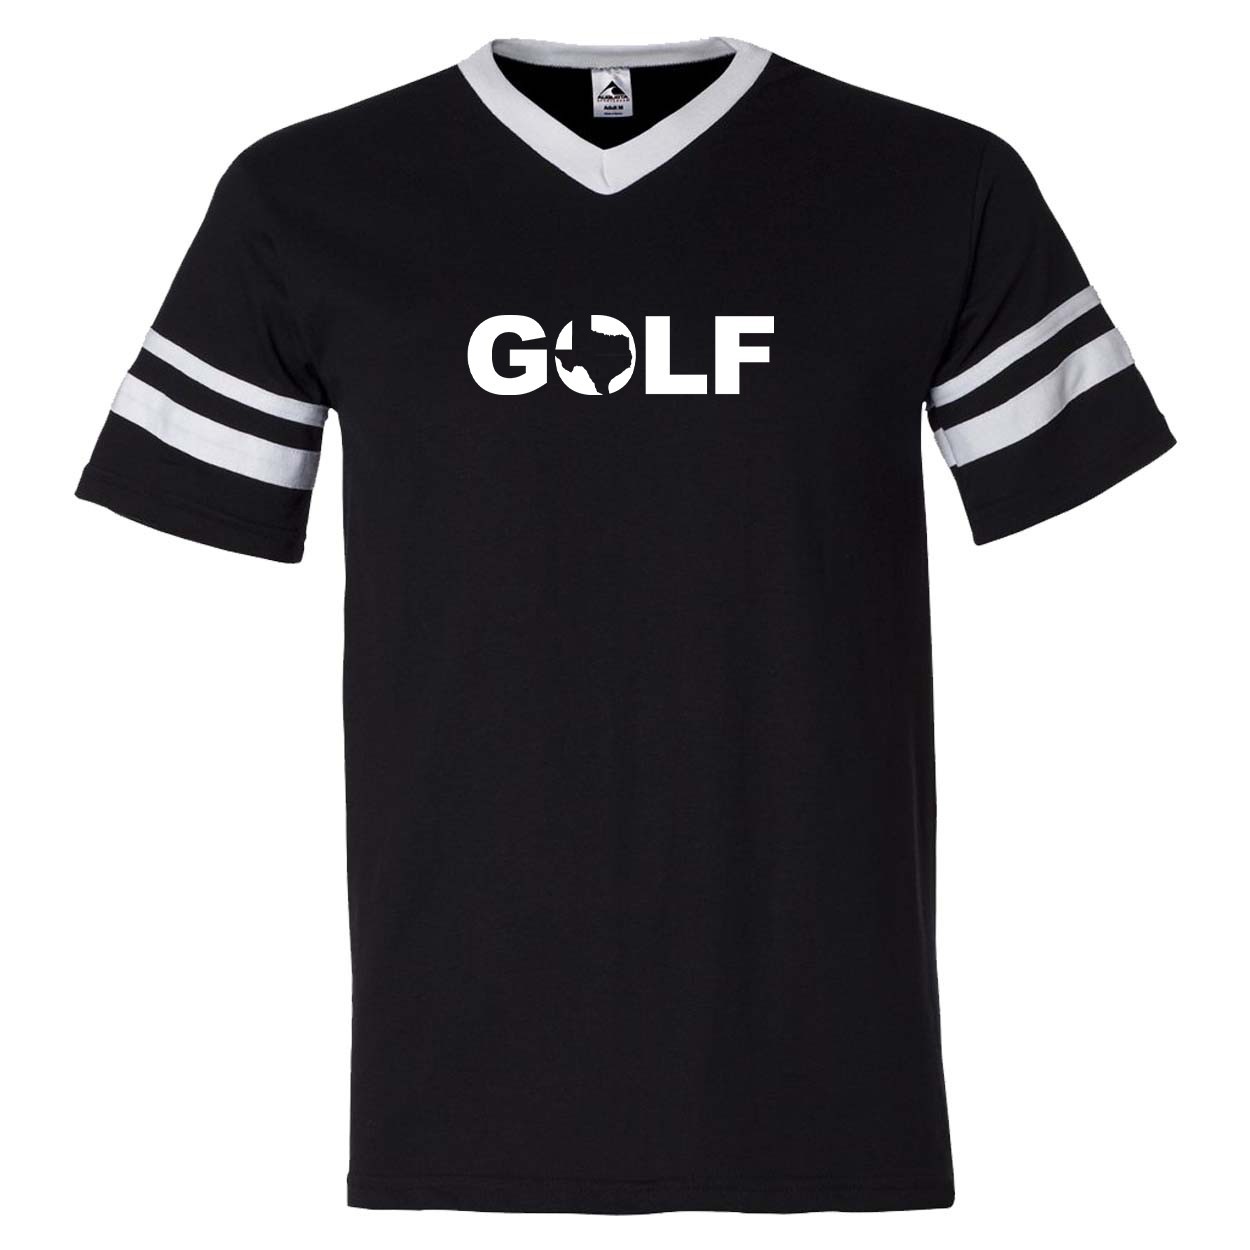 Golf Texas Classic Premium Striped Jersey T-Shirt Black/White (White Logo)